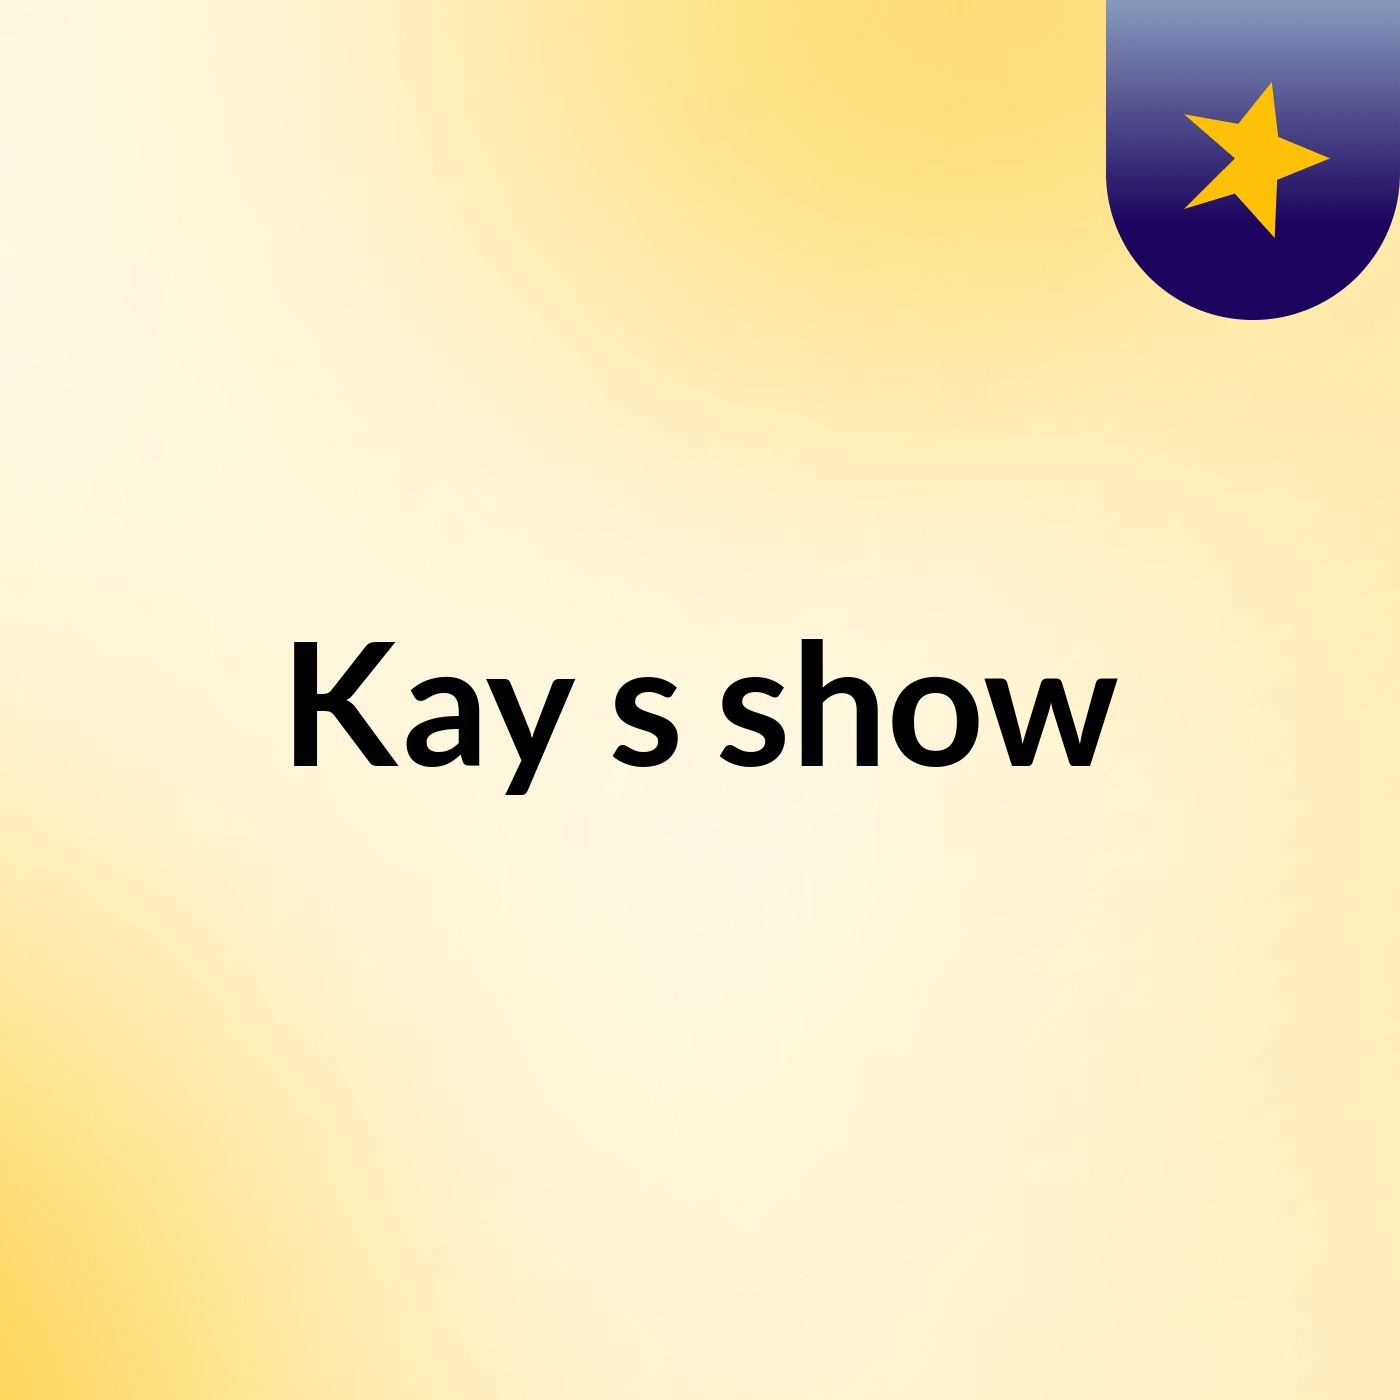 Episode 2 - p2 - Kay's show